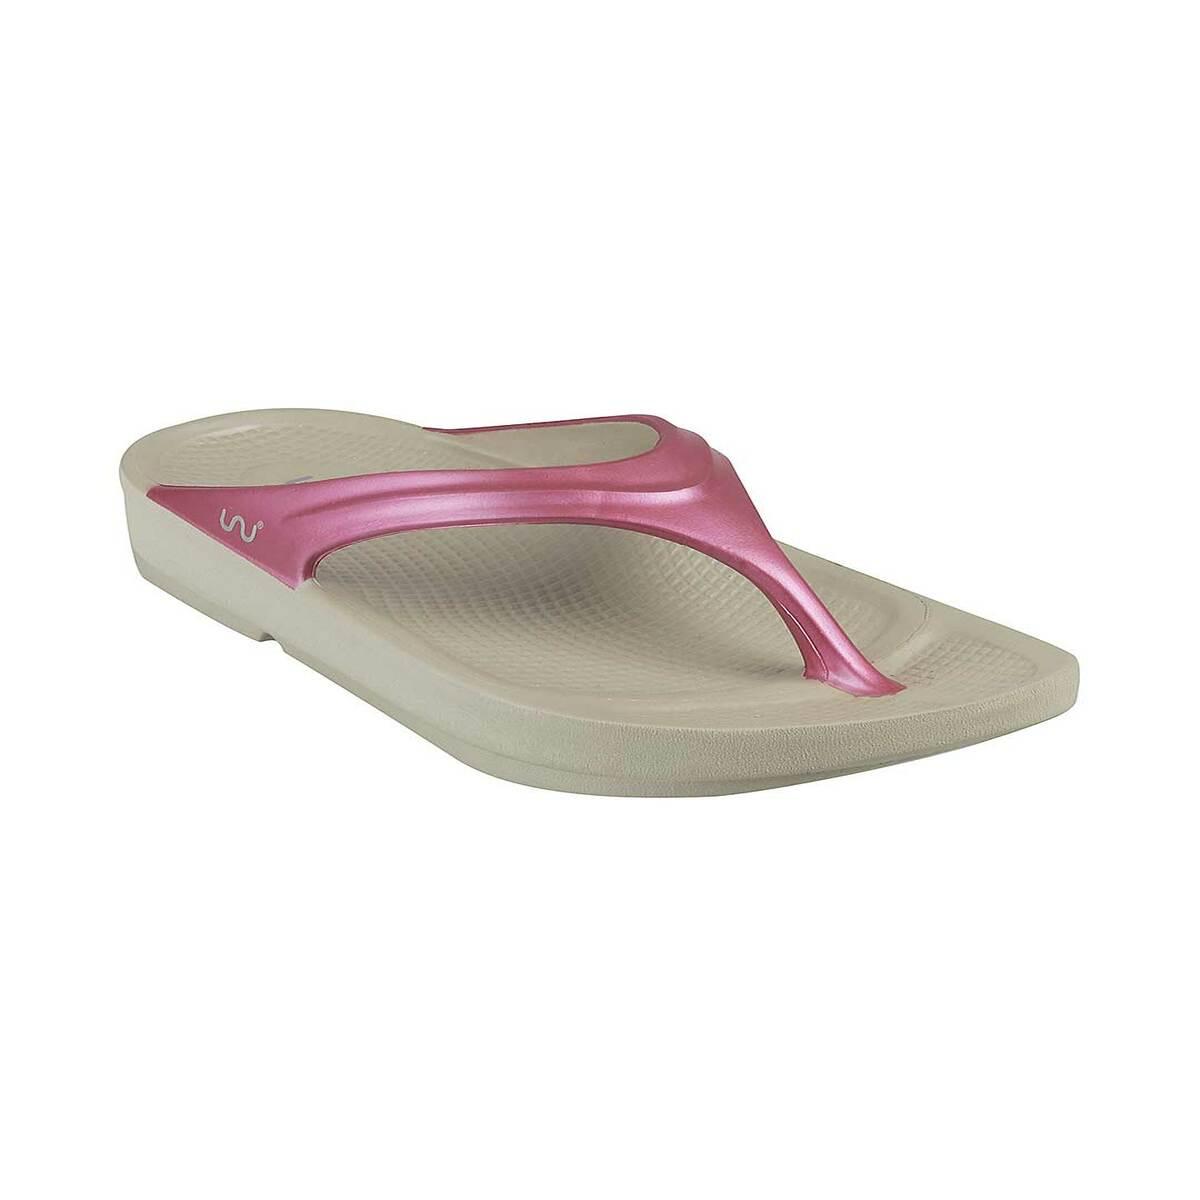 Under Armour Women's Marbella VII Thong Flip Flop/Sandals, Sport, Casual